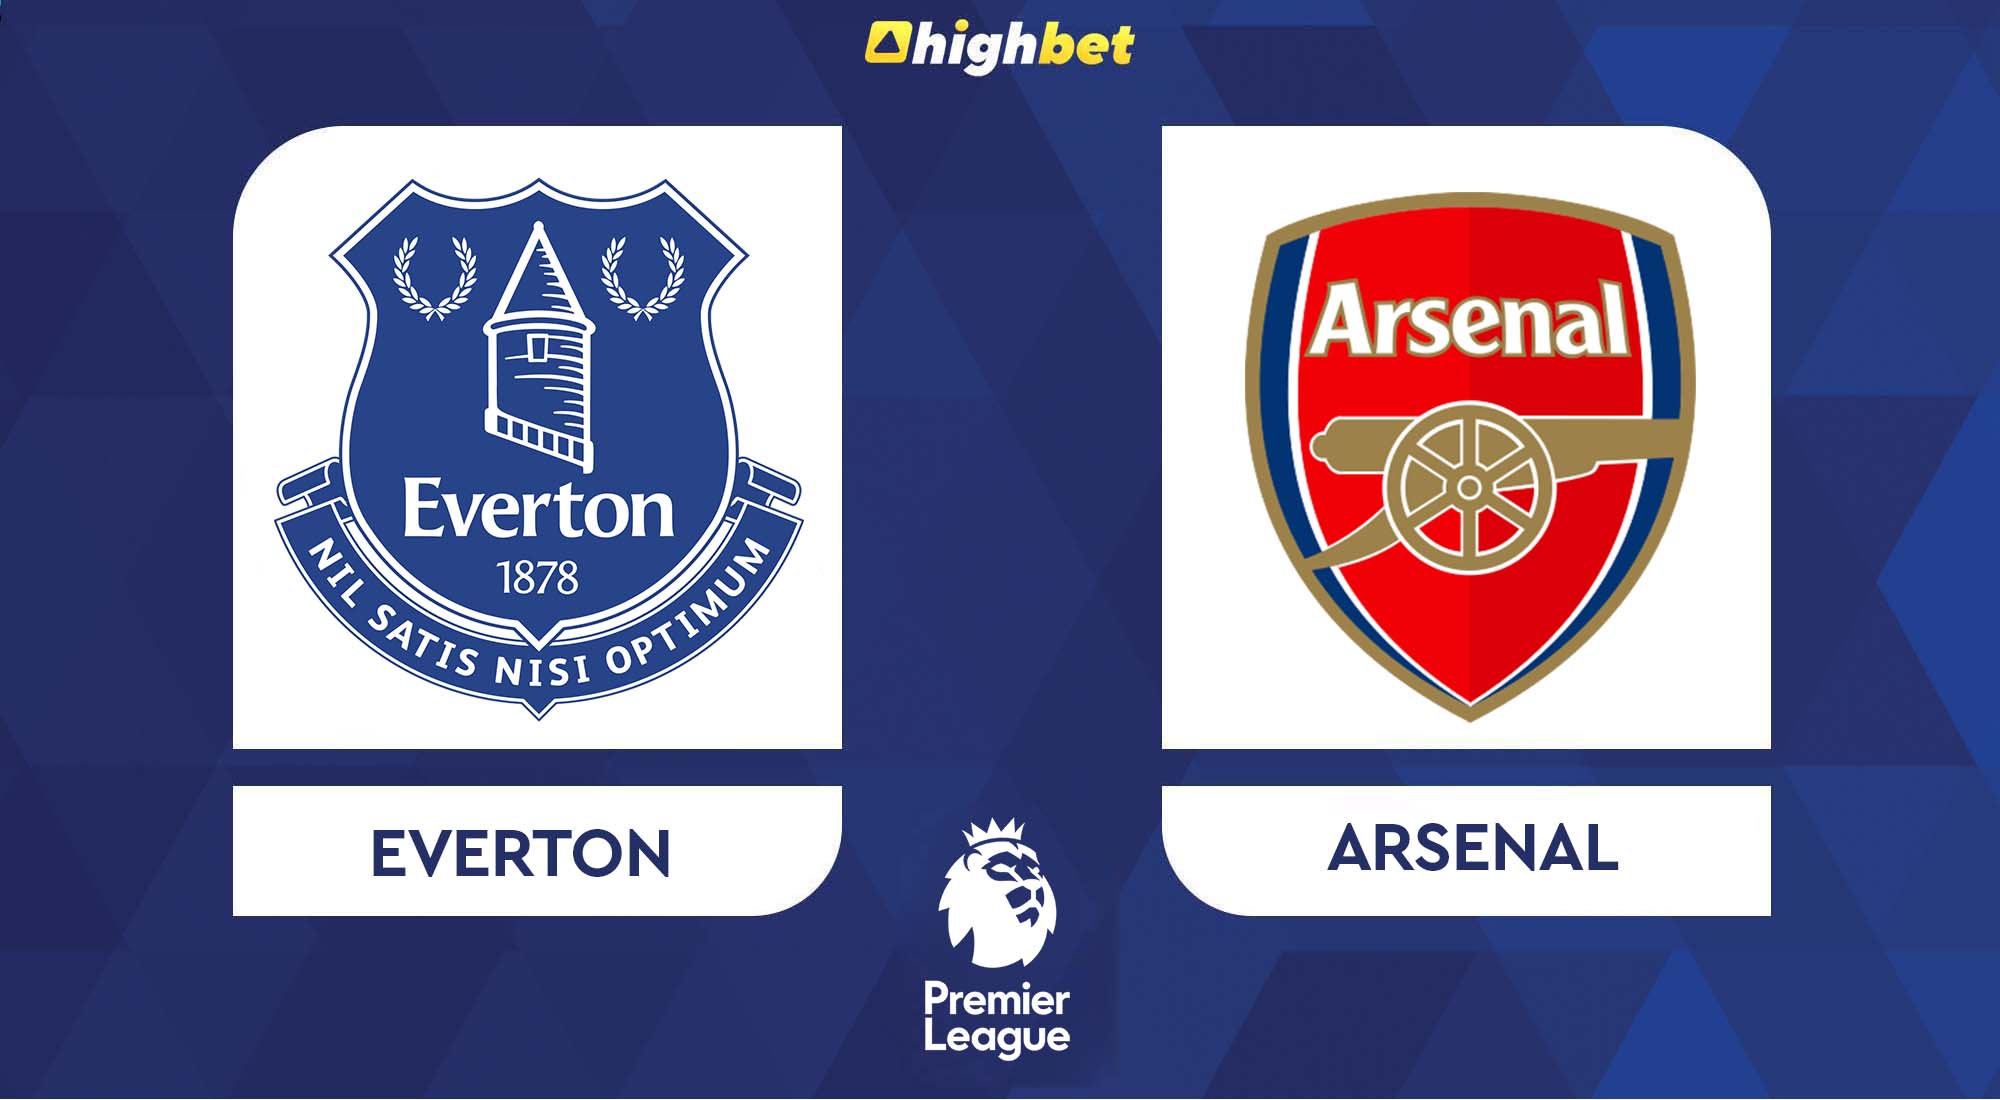 Everton vs Arsenal - highbet Premier League Pre-Match Analysis